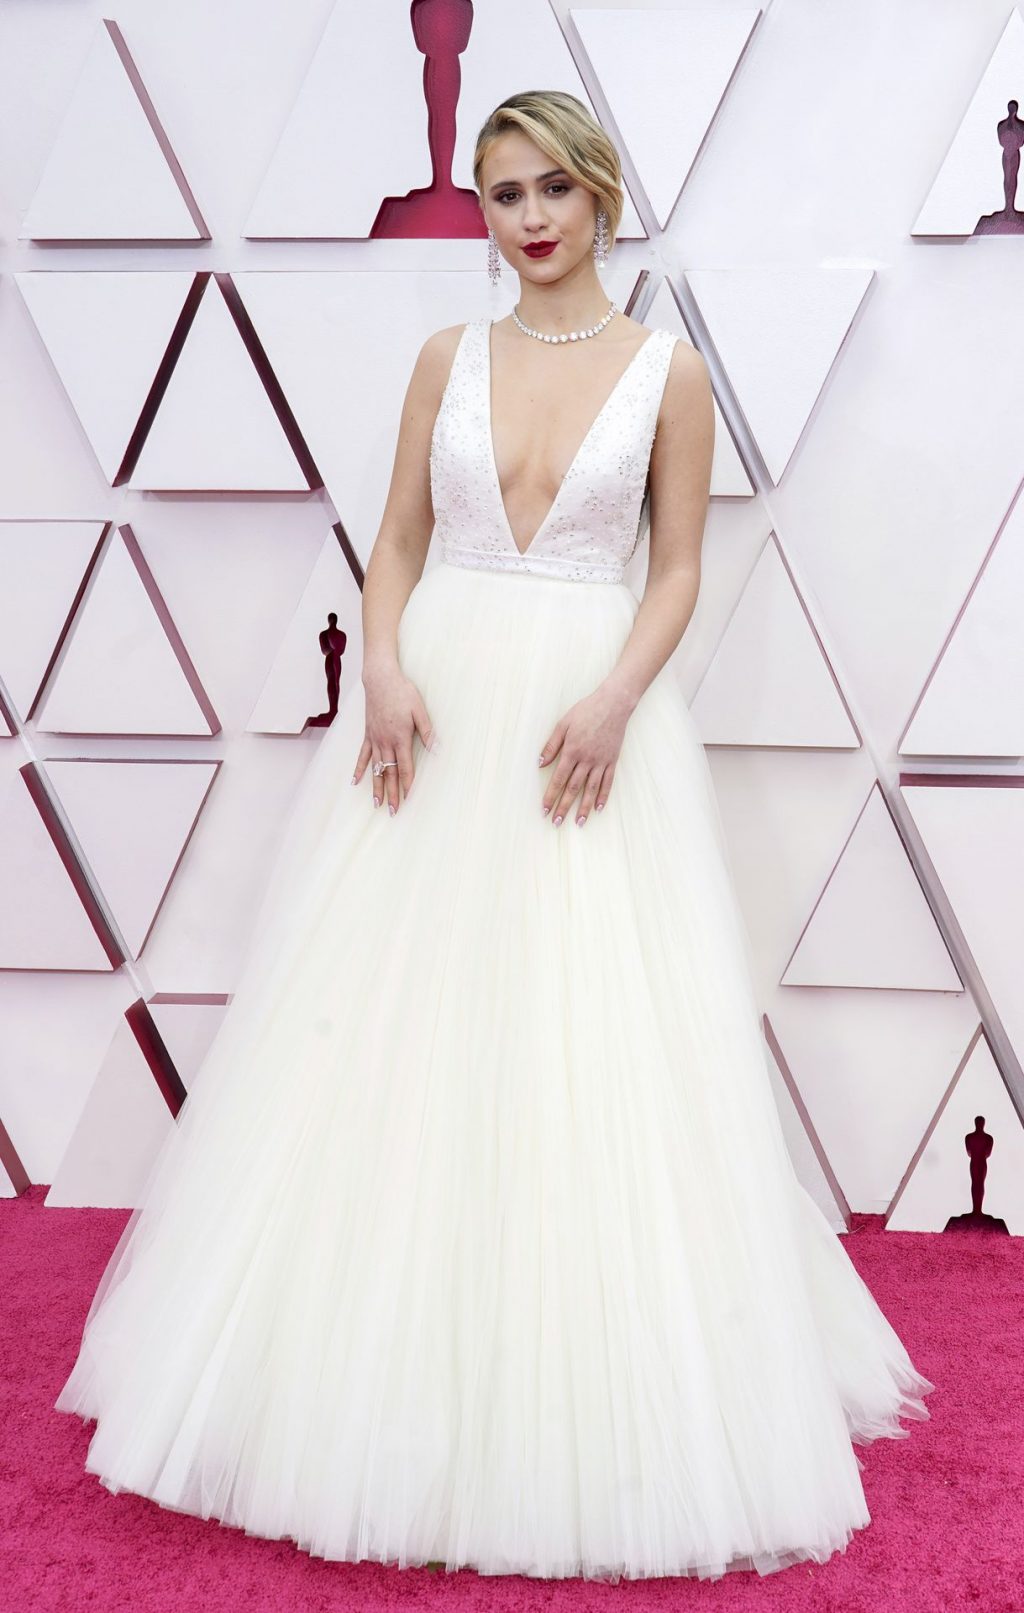 Maria Bakalova Stuns on The Red Carpet in a White Dress at The 93rd Oscars (35 Photos)